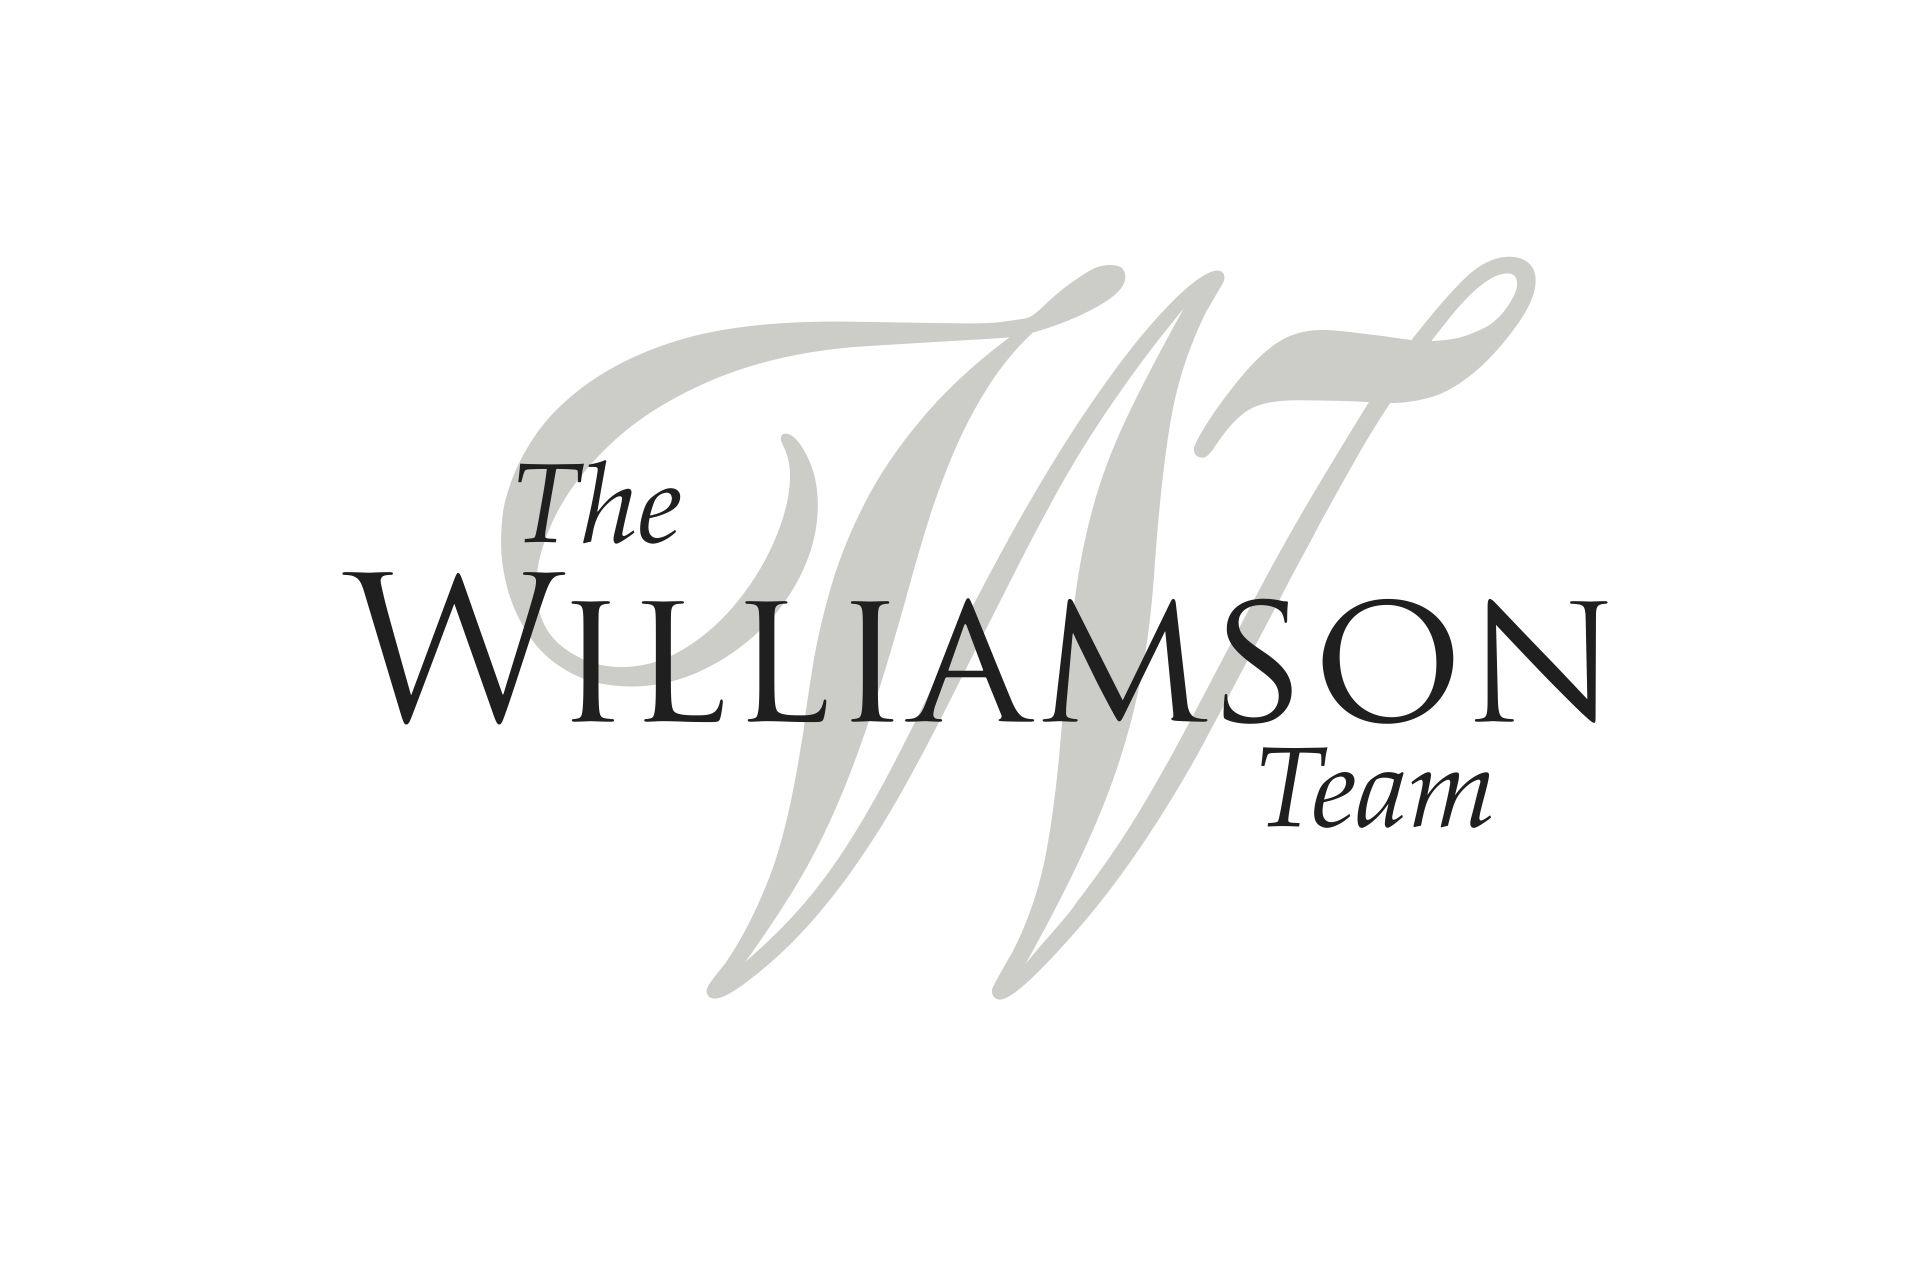 Rebuild White Logo - Williamson logo rebuild - Williamson Team Properties